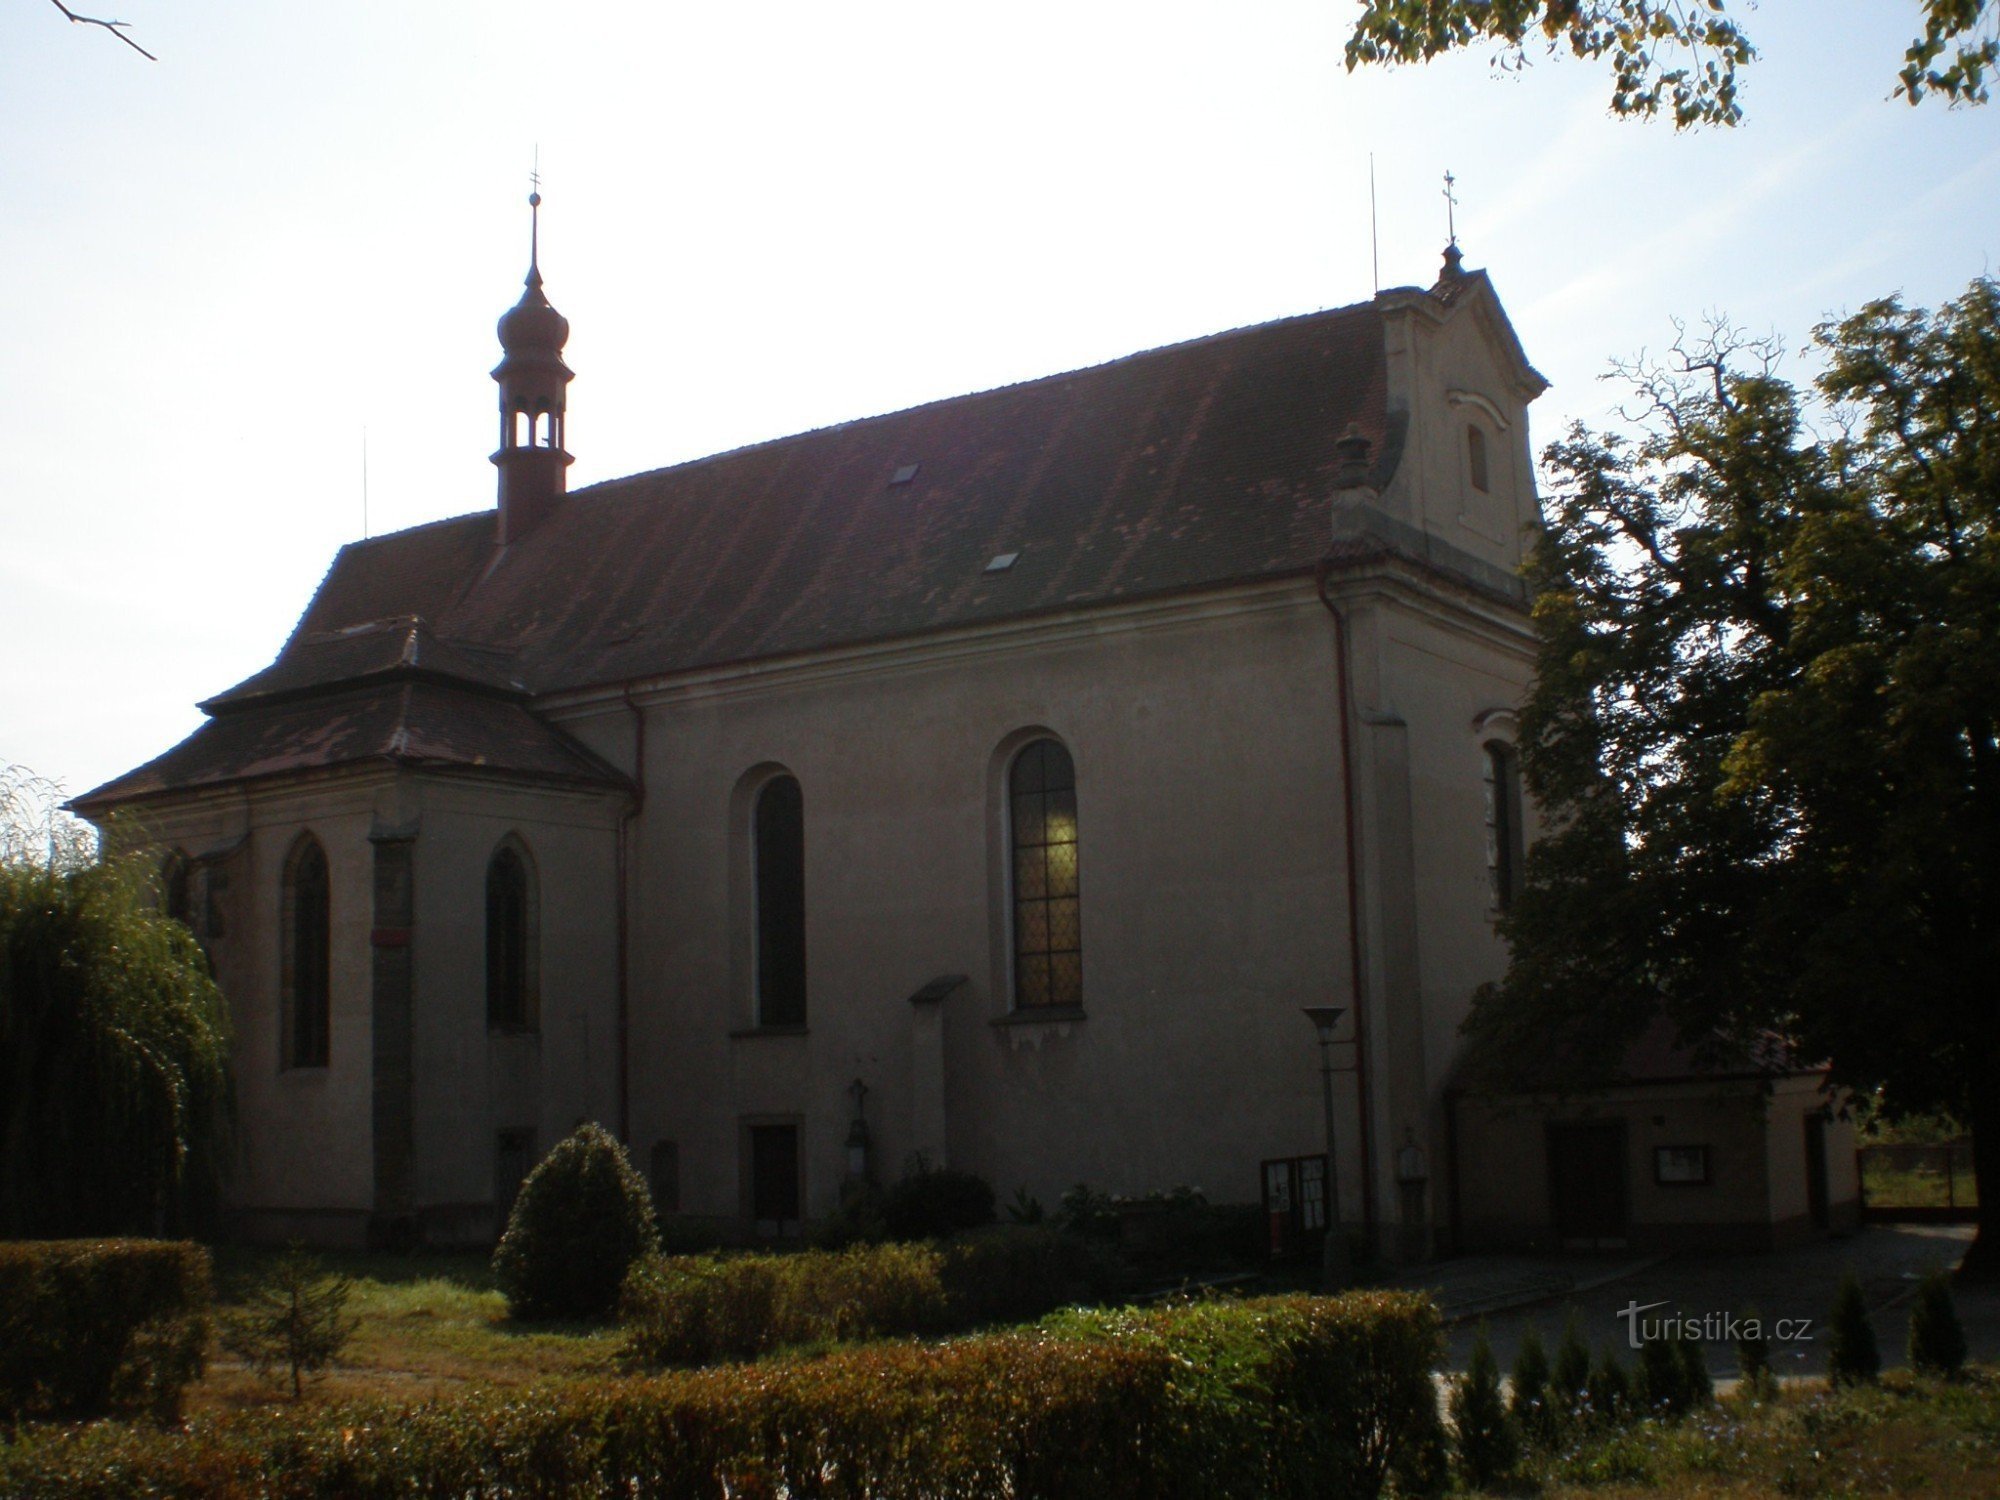 Sezemice - Church of St. Treenighet